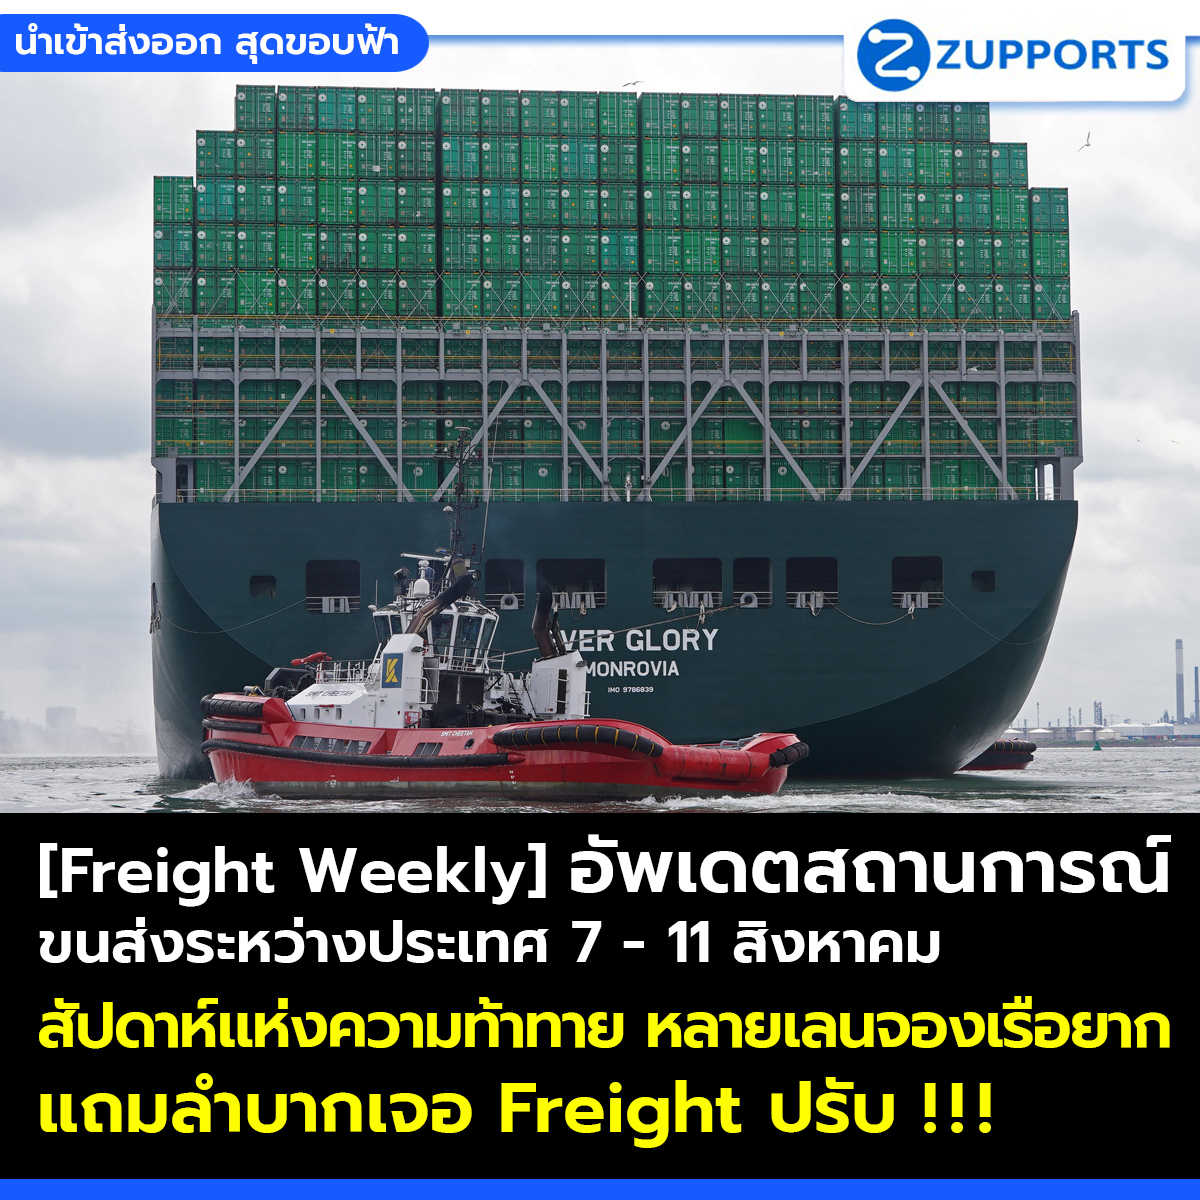 [Freight Weekly] : อัพเดตสถานการณ์ขนส่งสินค้าระหว่างประเทศ ประจำวันที่ 7 - 11 สิงหาคม กับ ZUPPORTS !!! สัปดาห์แห่งความท้าทาย หลายเลนจองเรือยาก แถมลำบากเจอ Freight ปรับ  !!!